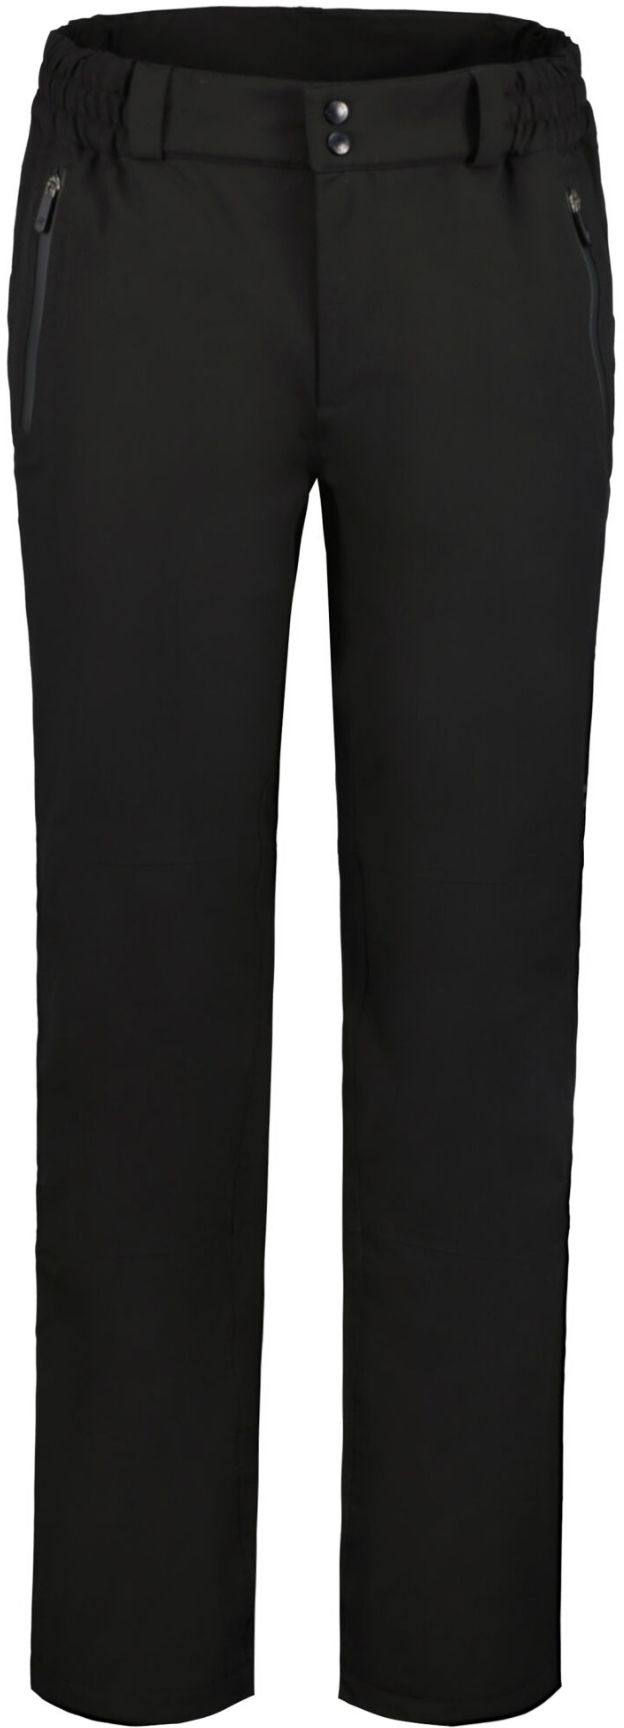 Saamois Pants Black XL